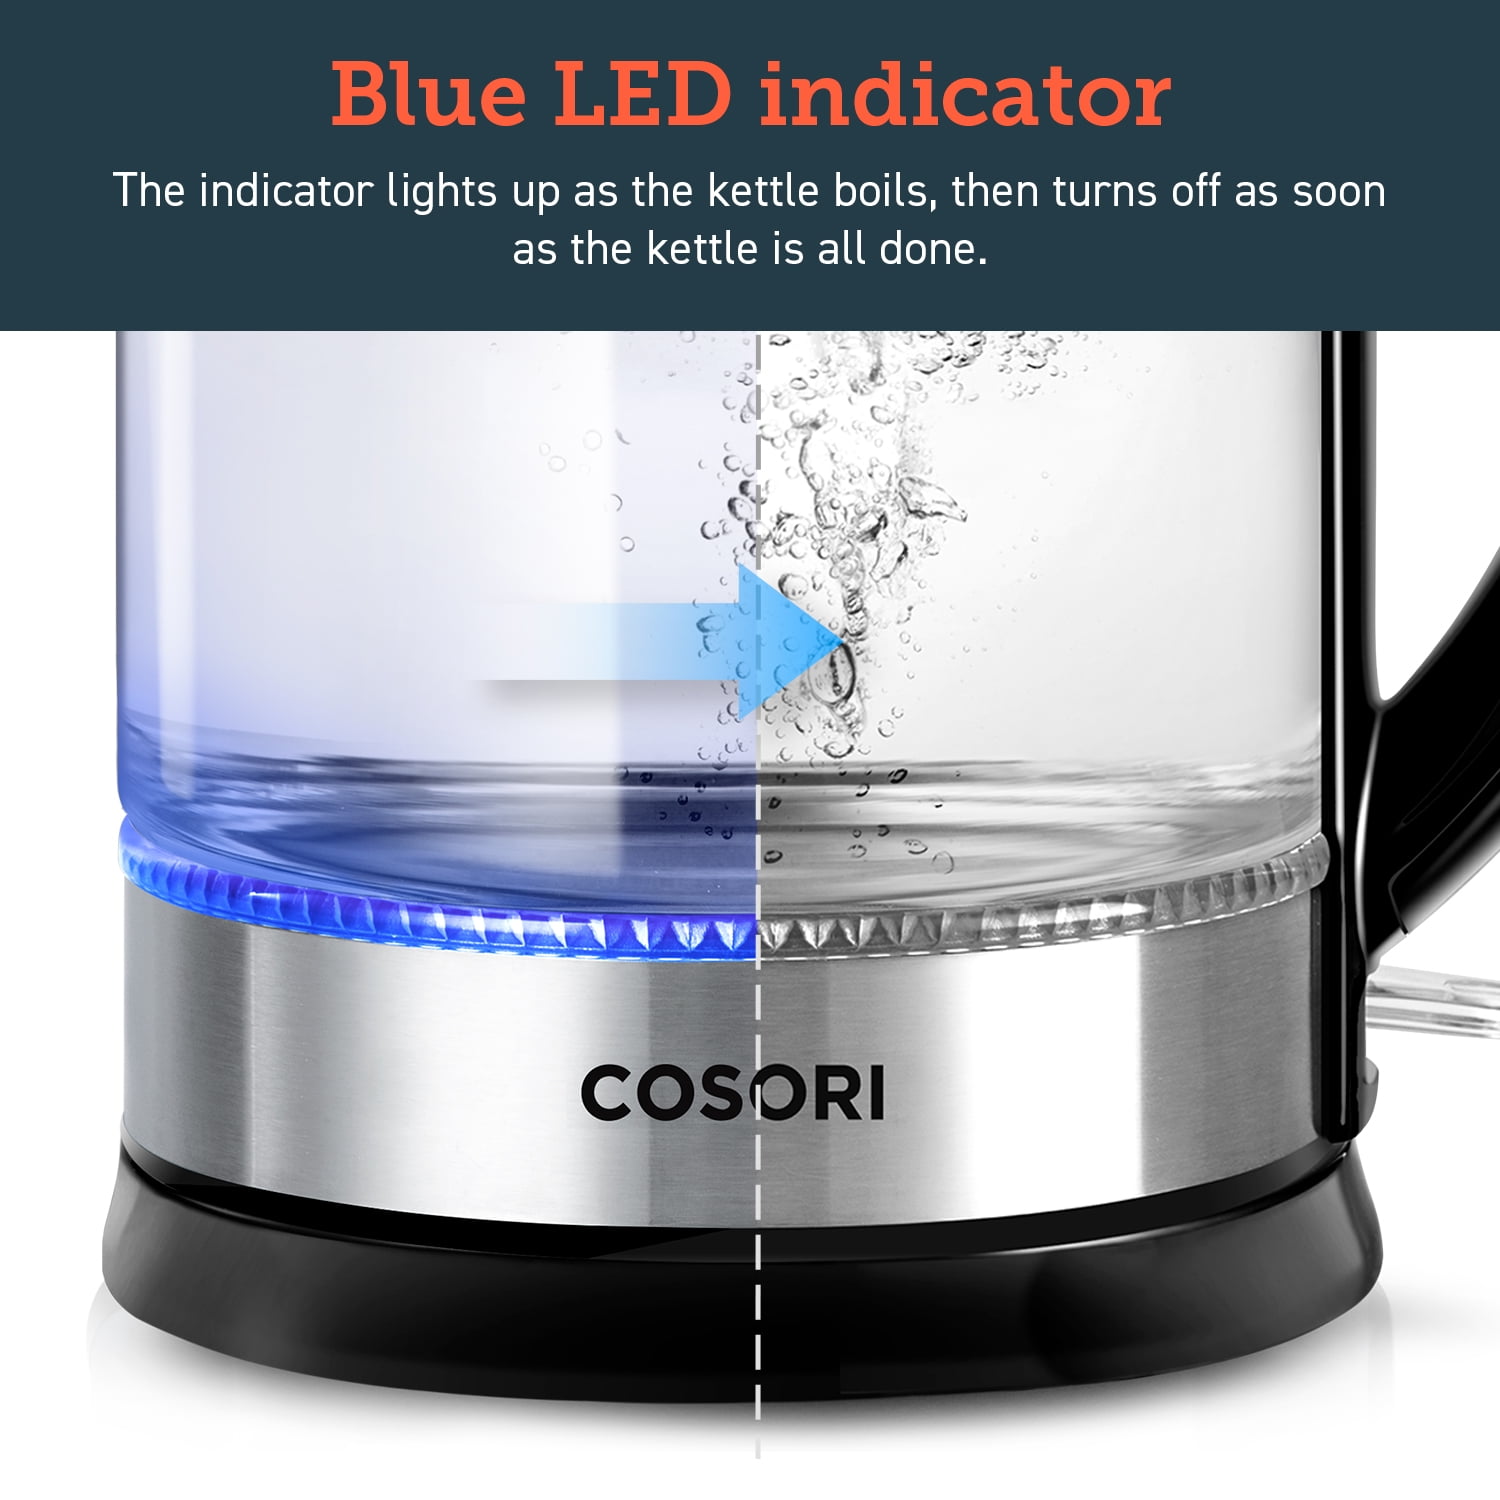 cosori glass electric kettle